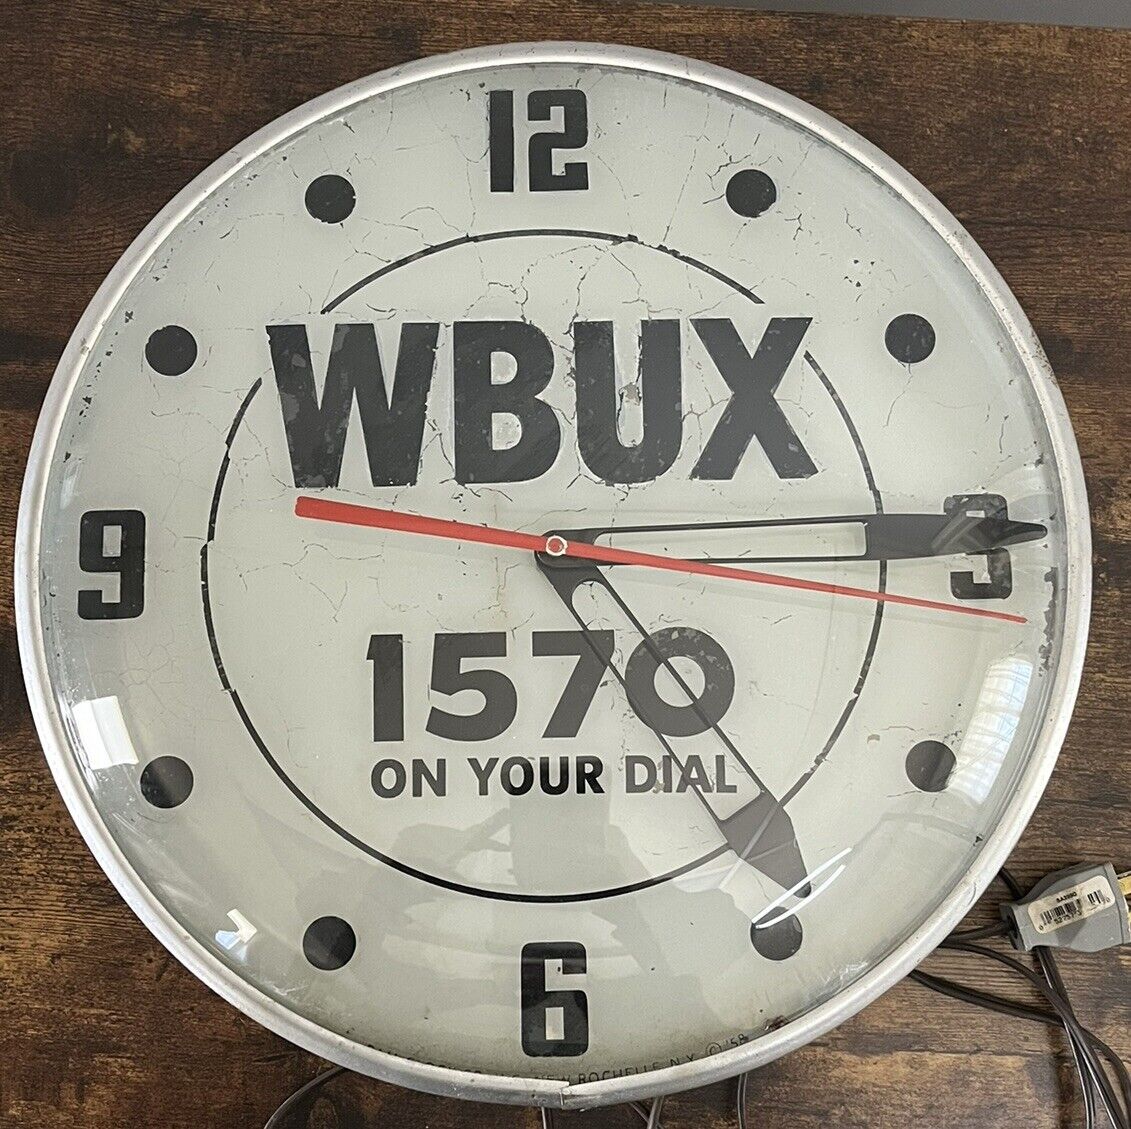 Vintage PAM Clock Advertising Radio Station WBUX 1570 Doylestown PA - WORKS 